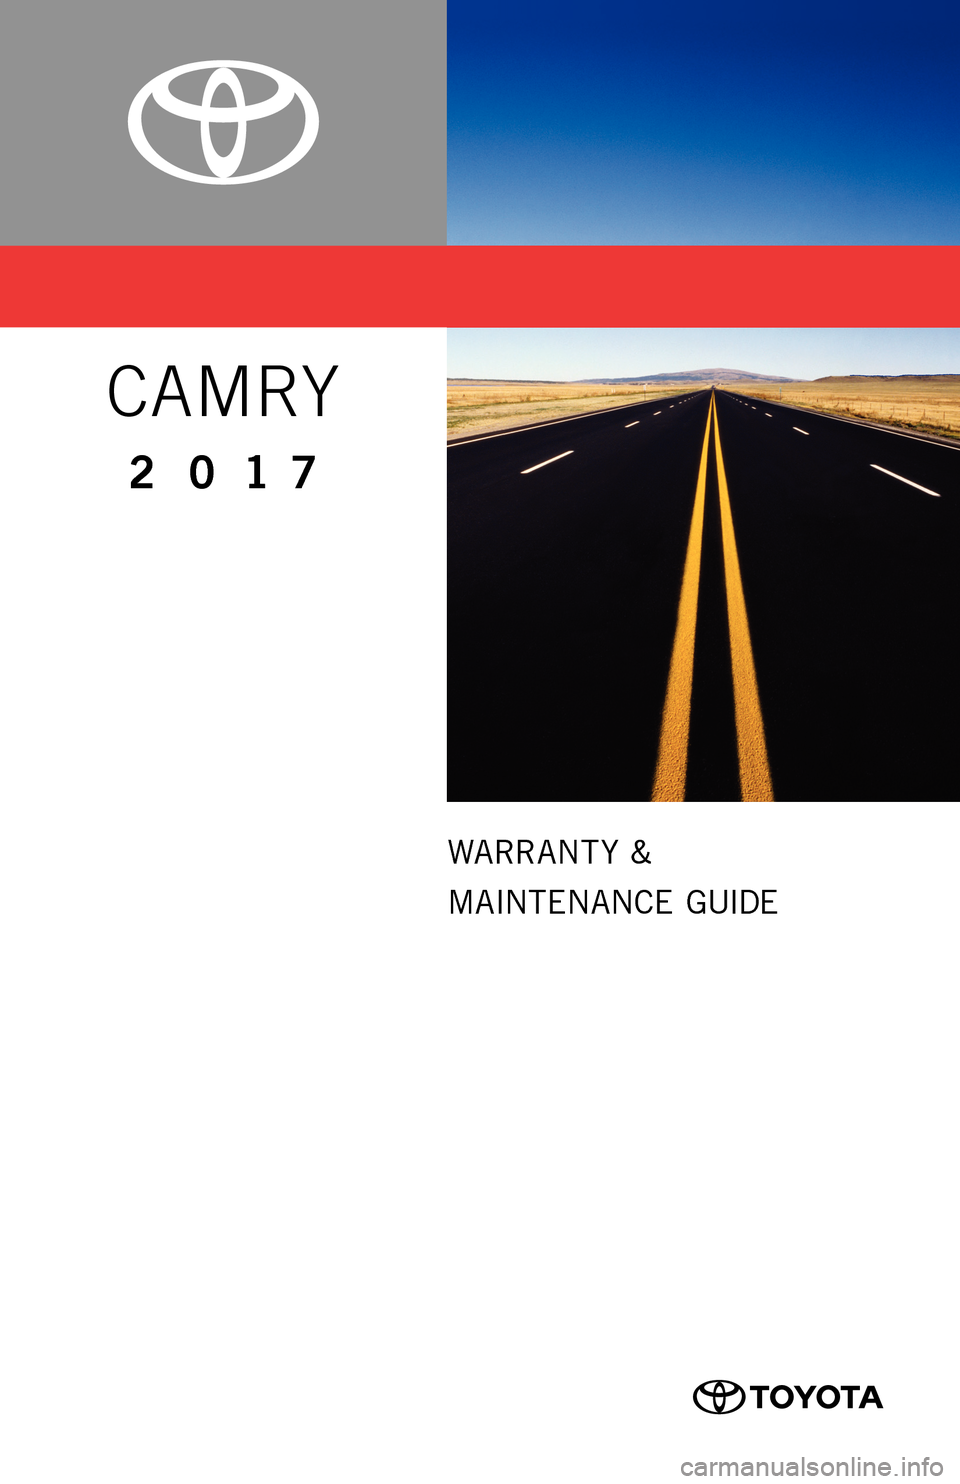 TOYOTA CAMRY 2017 XV50 / 9.G Warranty And Maintenance Guide WARRANTY & 
MAINTENANCE GUIDE
CAMRY
2017 